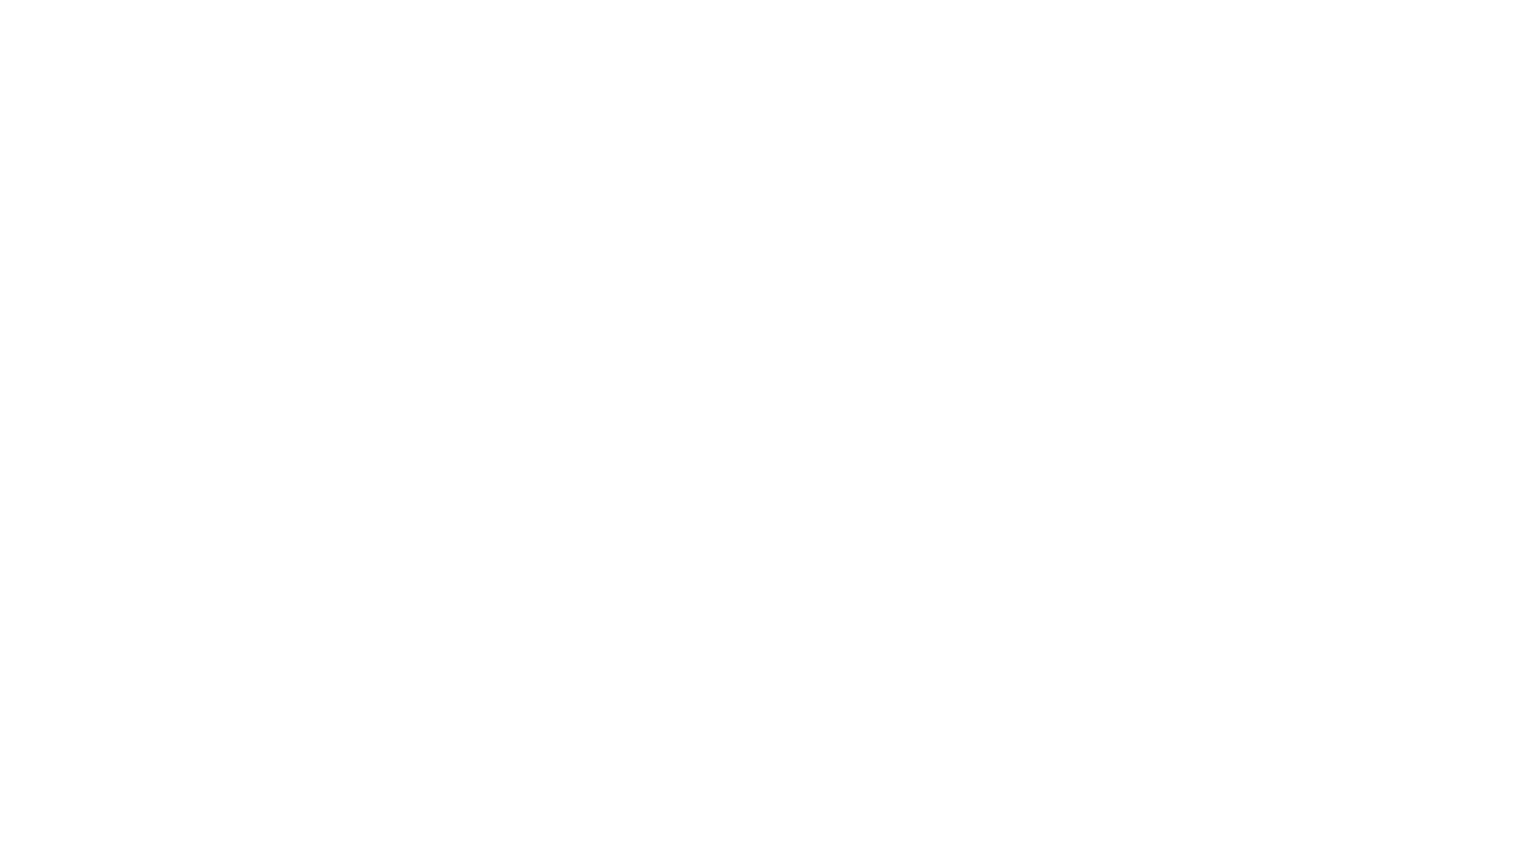 Topgolf Callaway Brands logo large for dark backgrounds (transparent PNG)